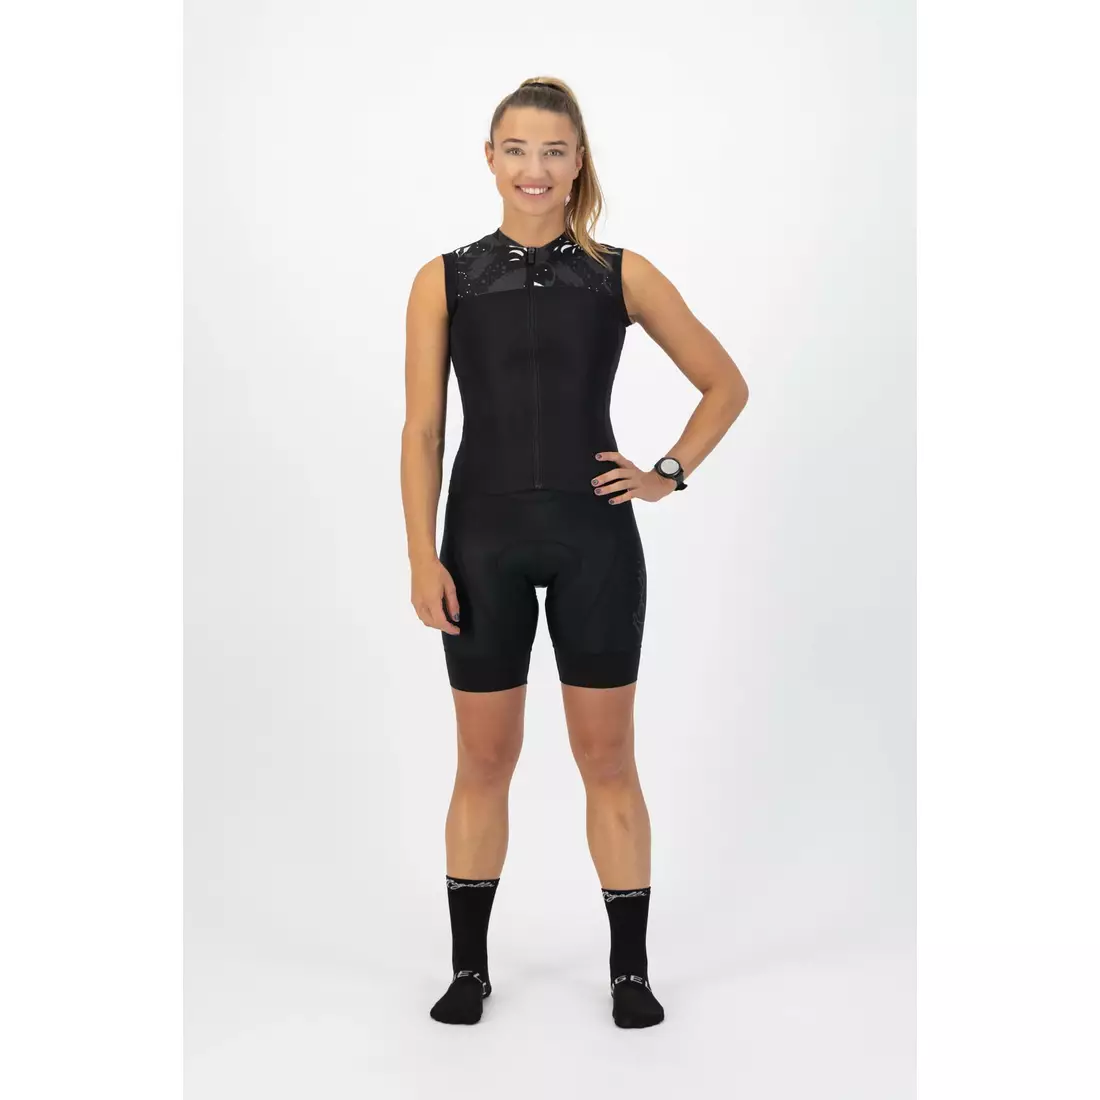 ROGELLI HARMONY Sleeveless women's cycling jersey,, black